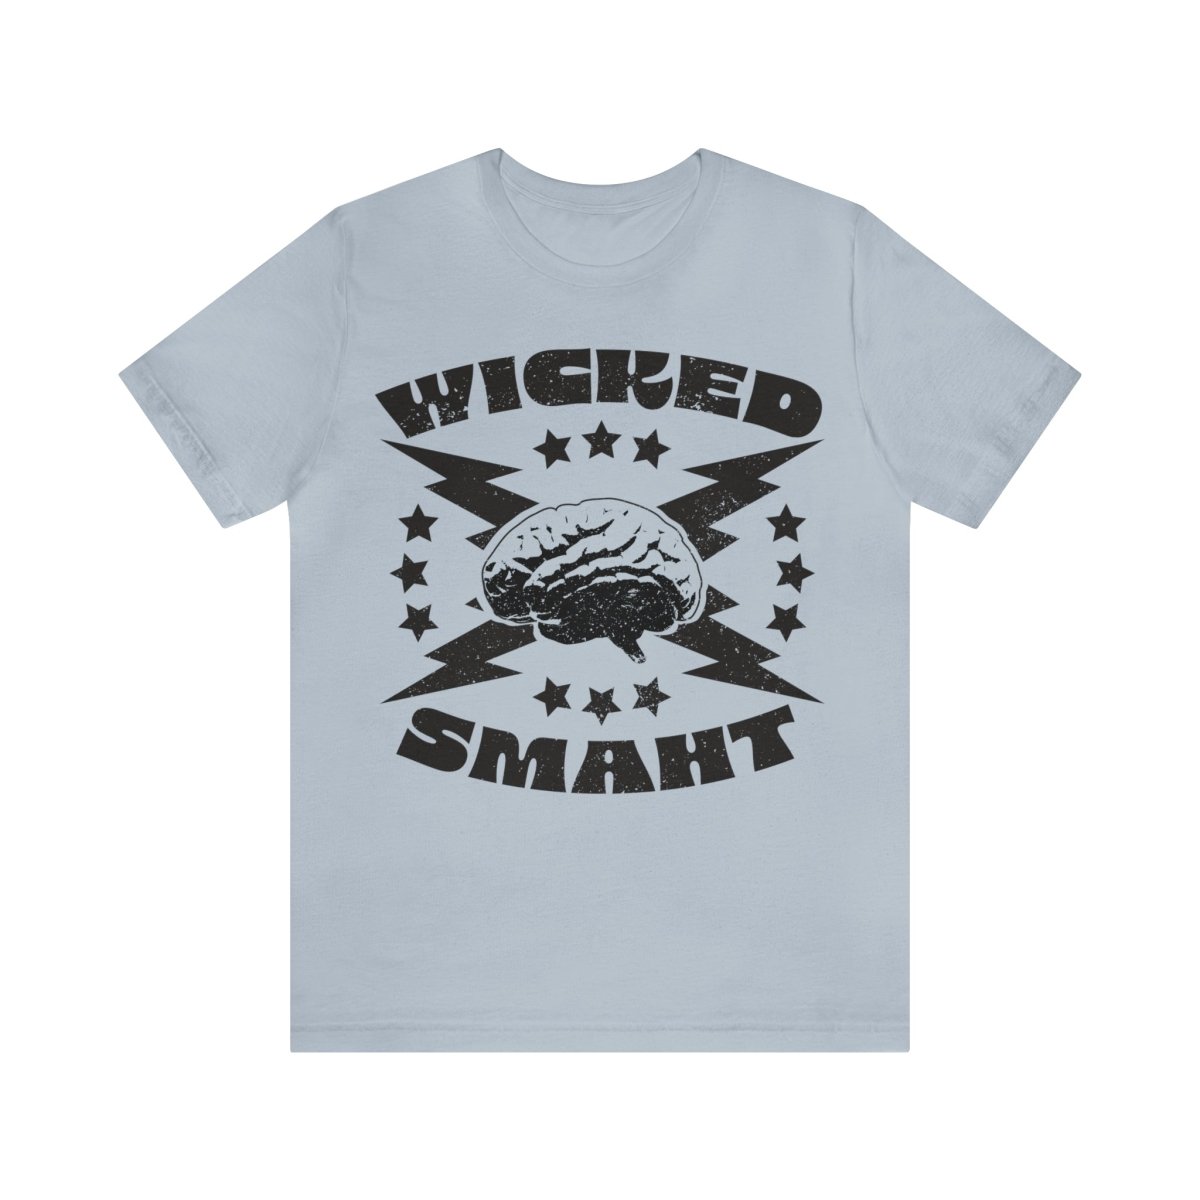 Wicked Smaht Premium T-Shirt, New England, Boston, Smart, Accent, Funny